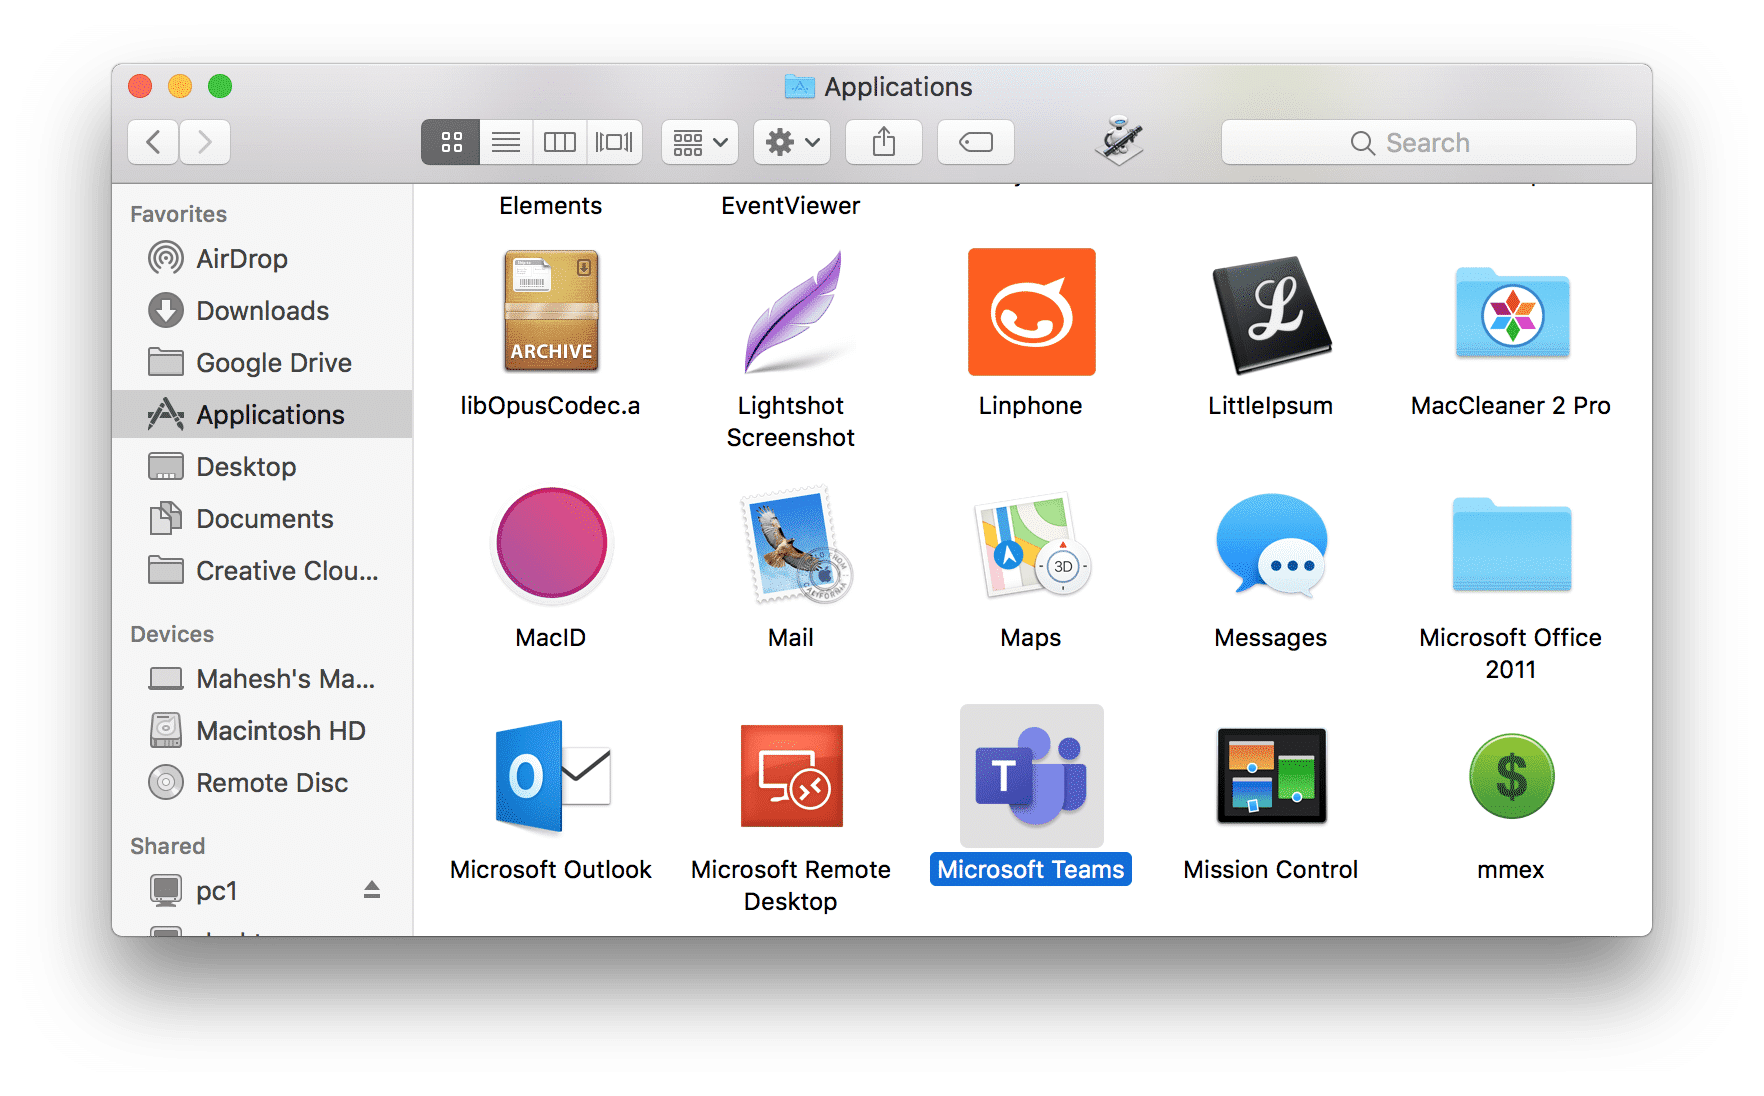 uninstall apps on mac